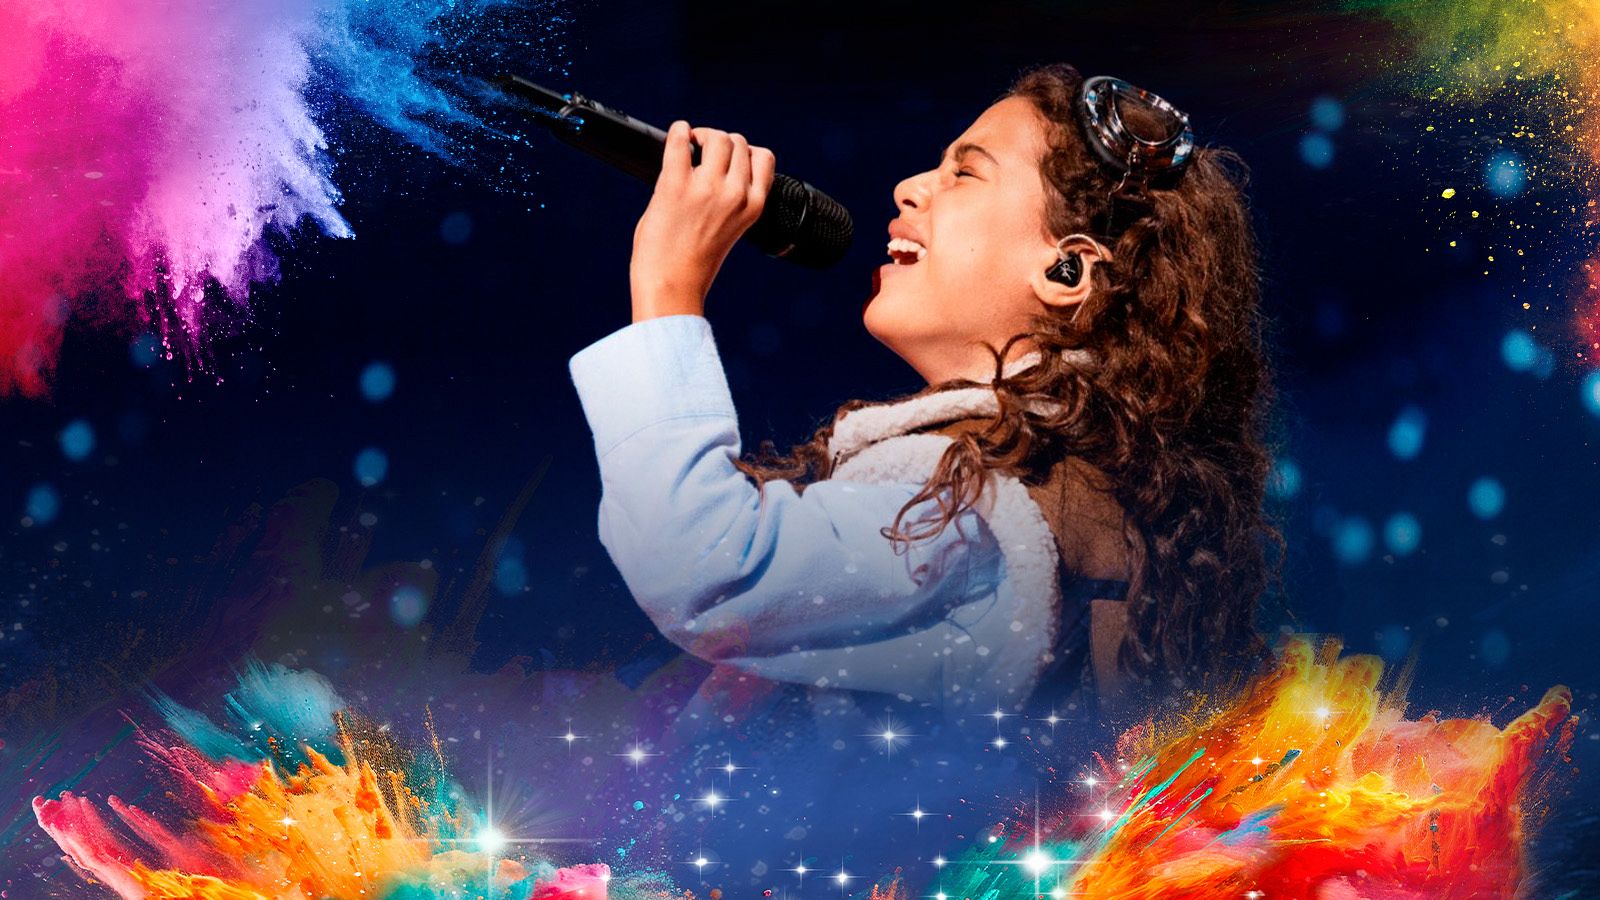 Eurovisi�n Junior 2023 - Espa�a: Sandra Valero canta "Loviu" - Ver ahora